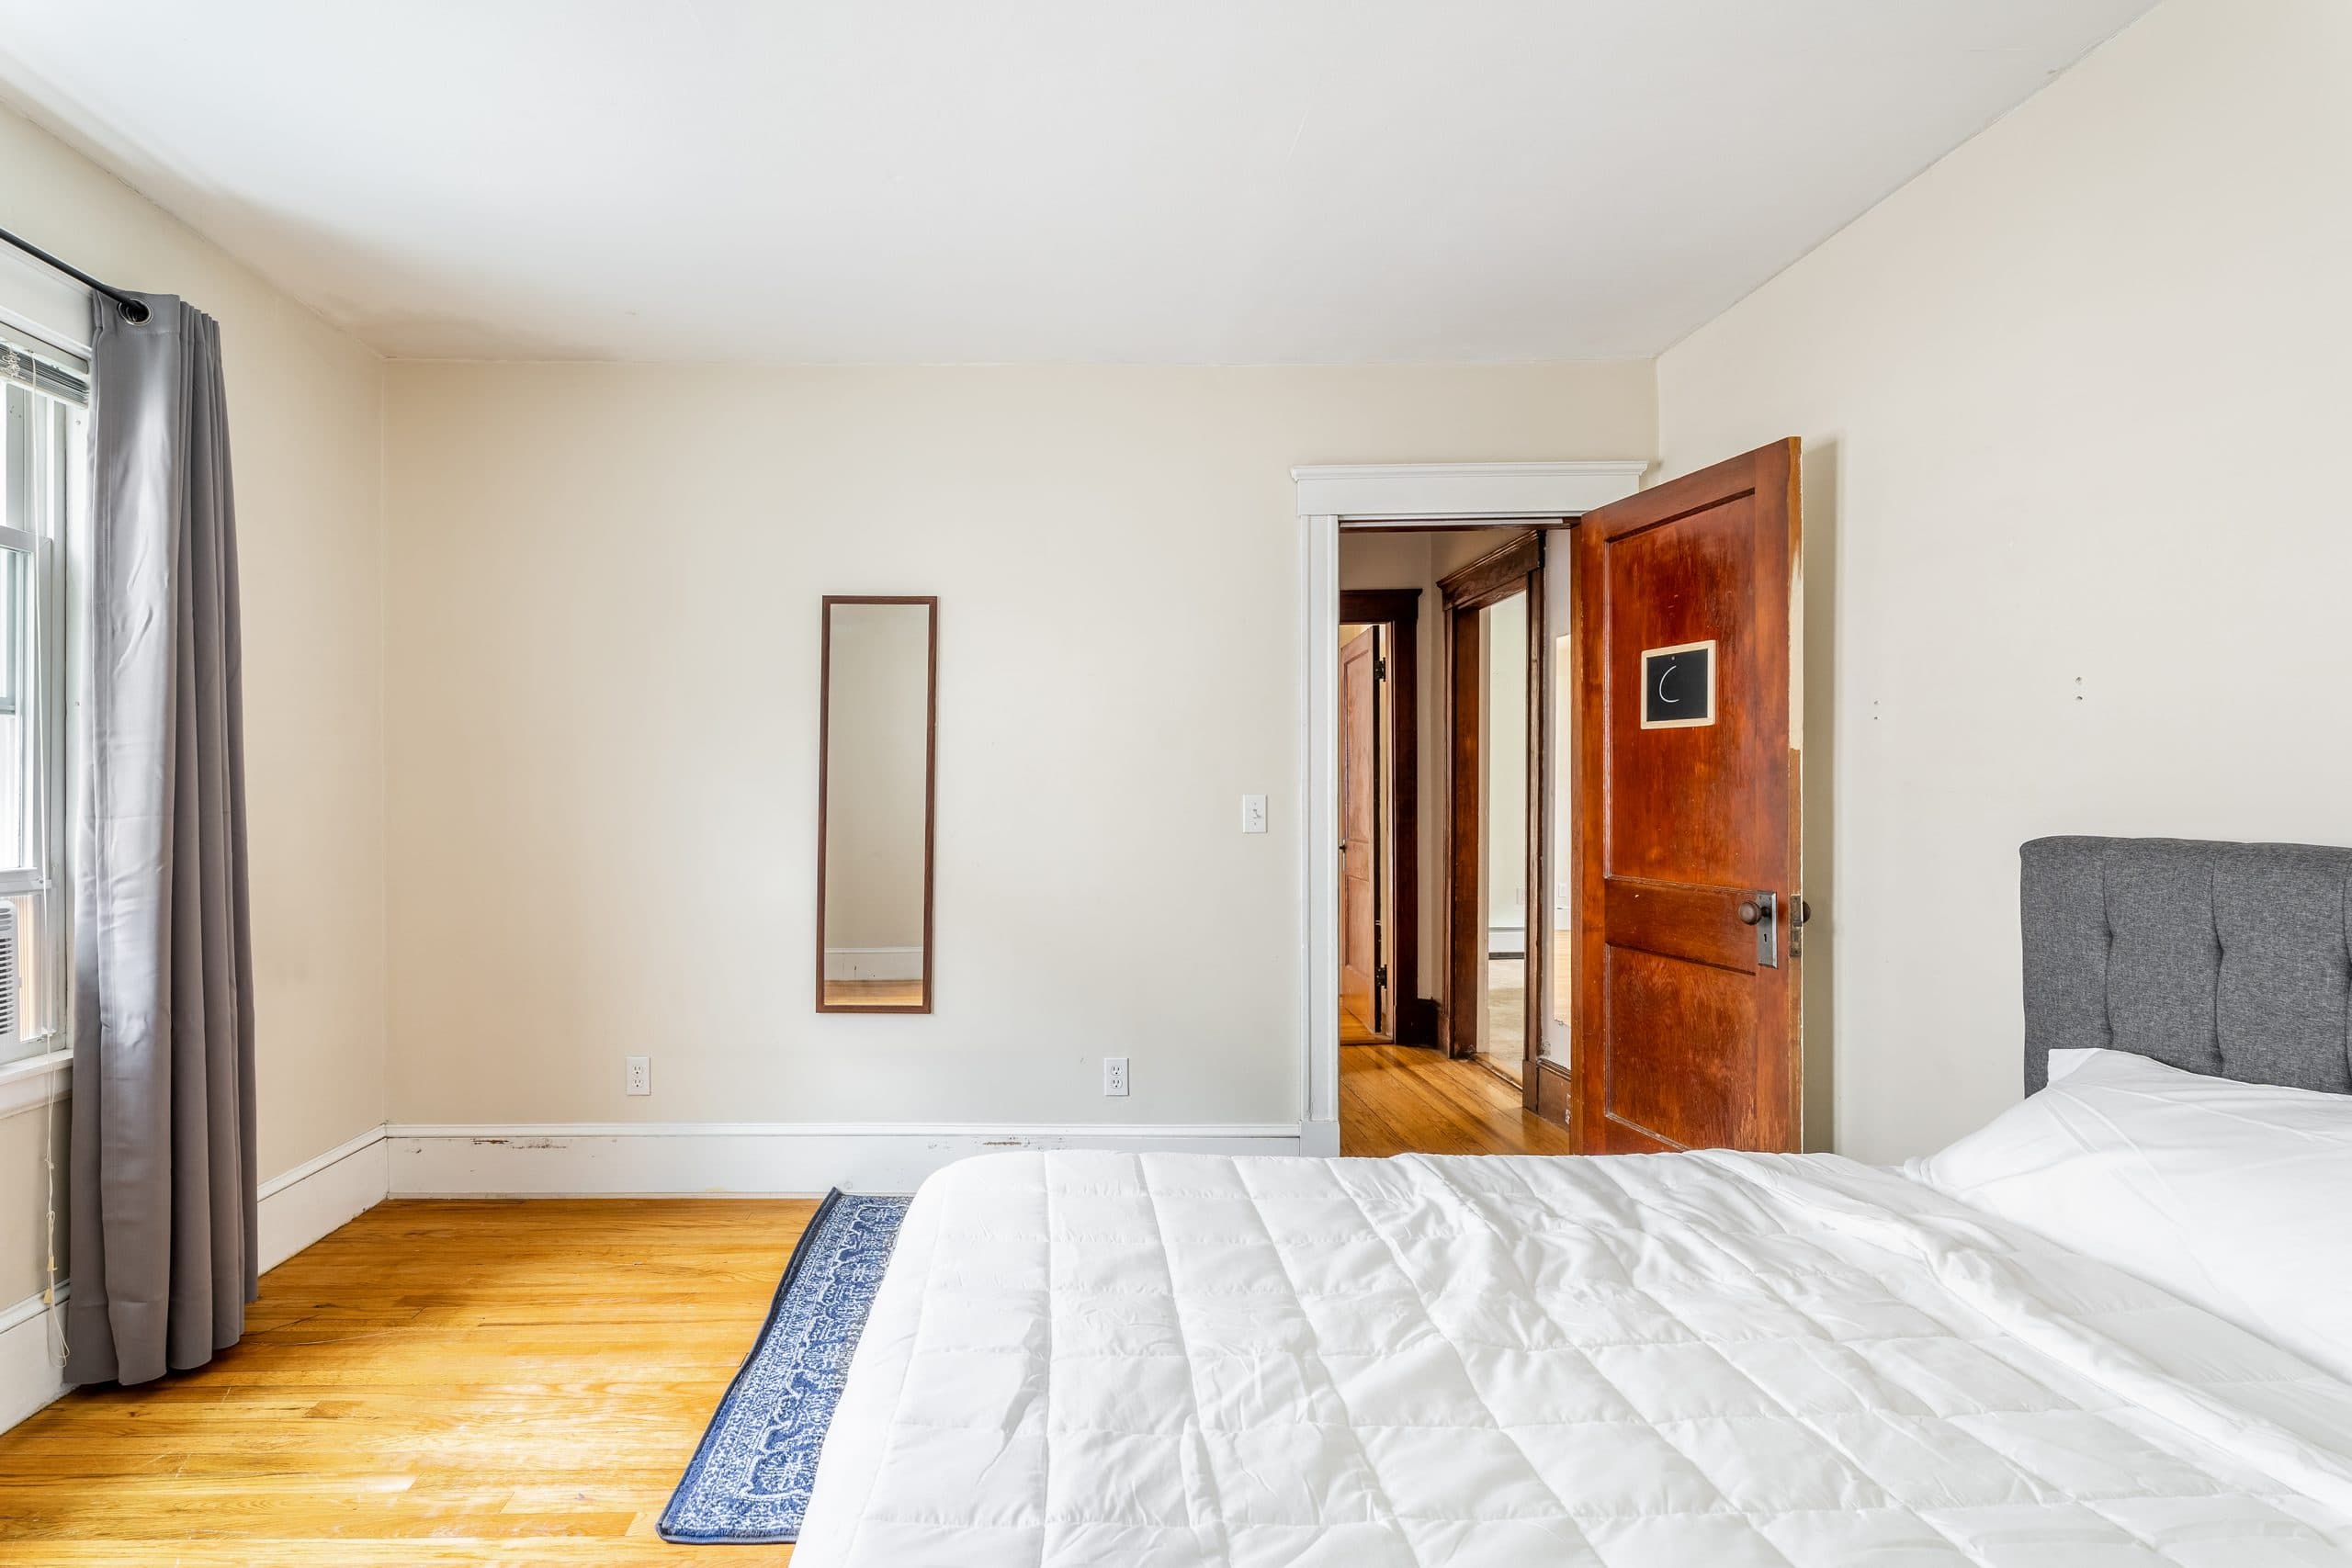 Photo 27 of #3974: Full Bedroom B at June Homes